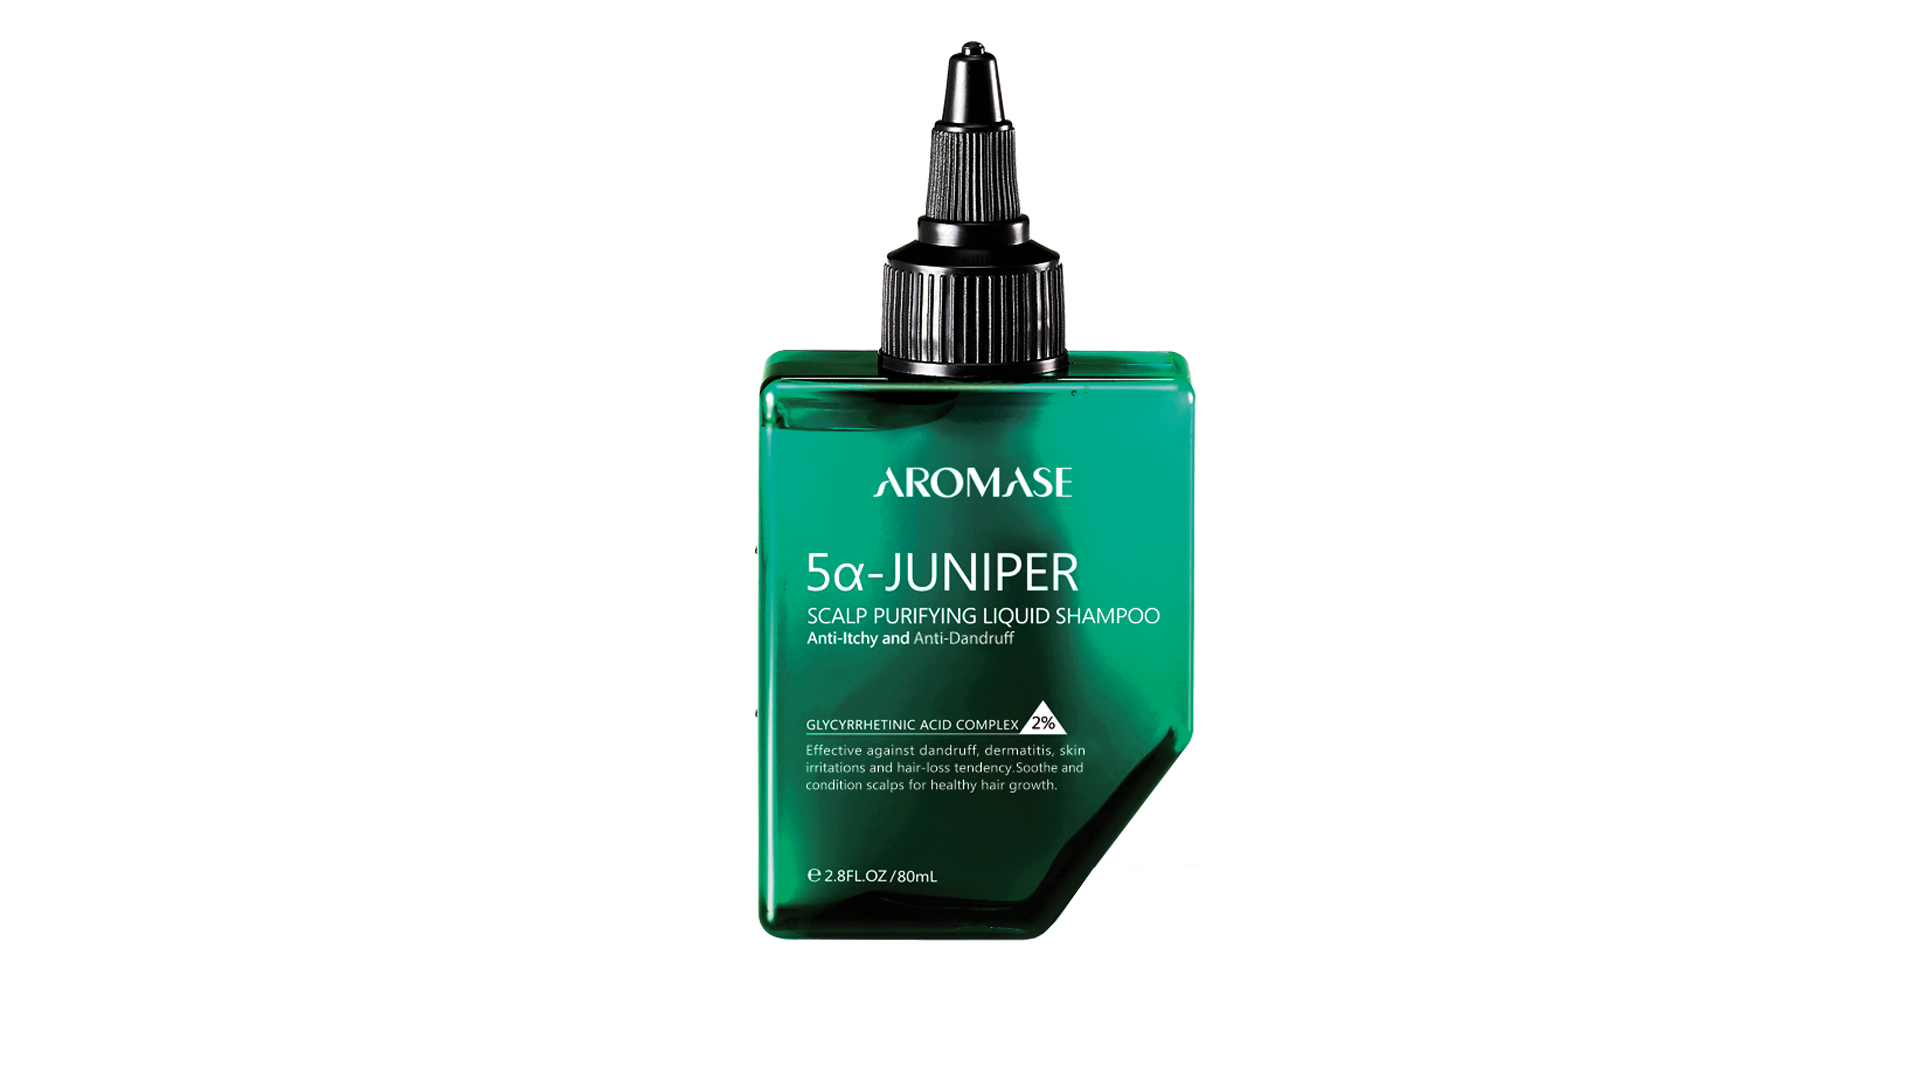 AROMASE 5a JUNIPER Scalp purifying liquid Shampoo 80 ml